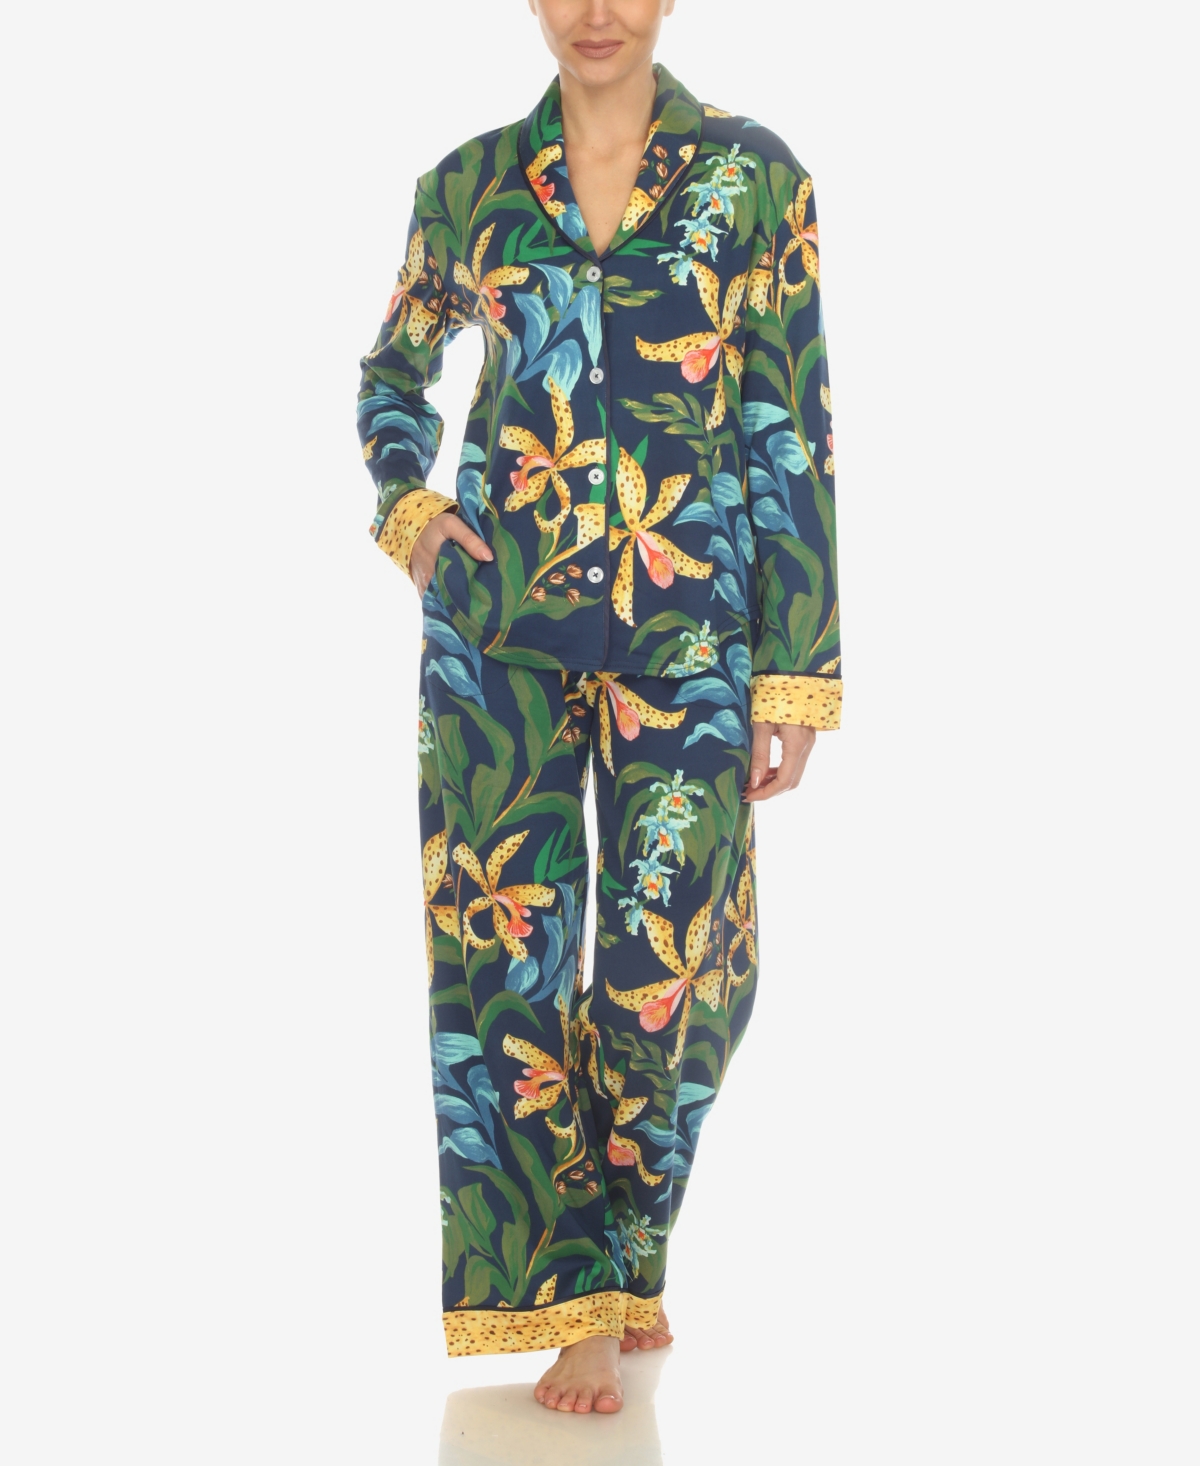 Women's 2 Pc. Wildflower Print Pajama Set - Mint